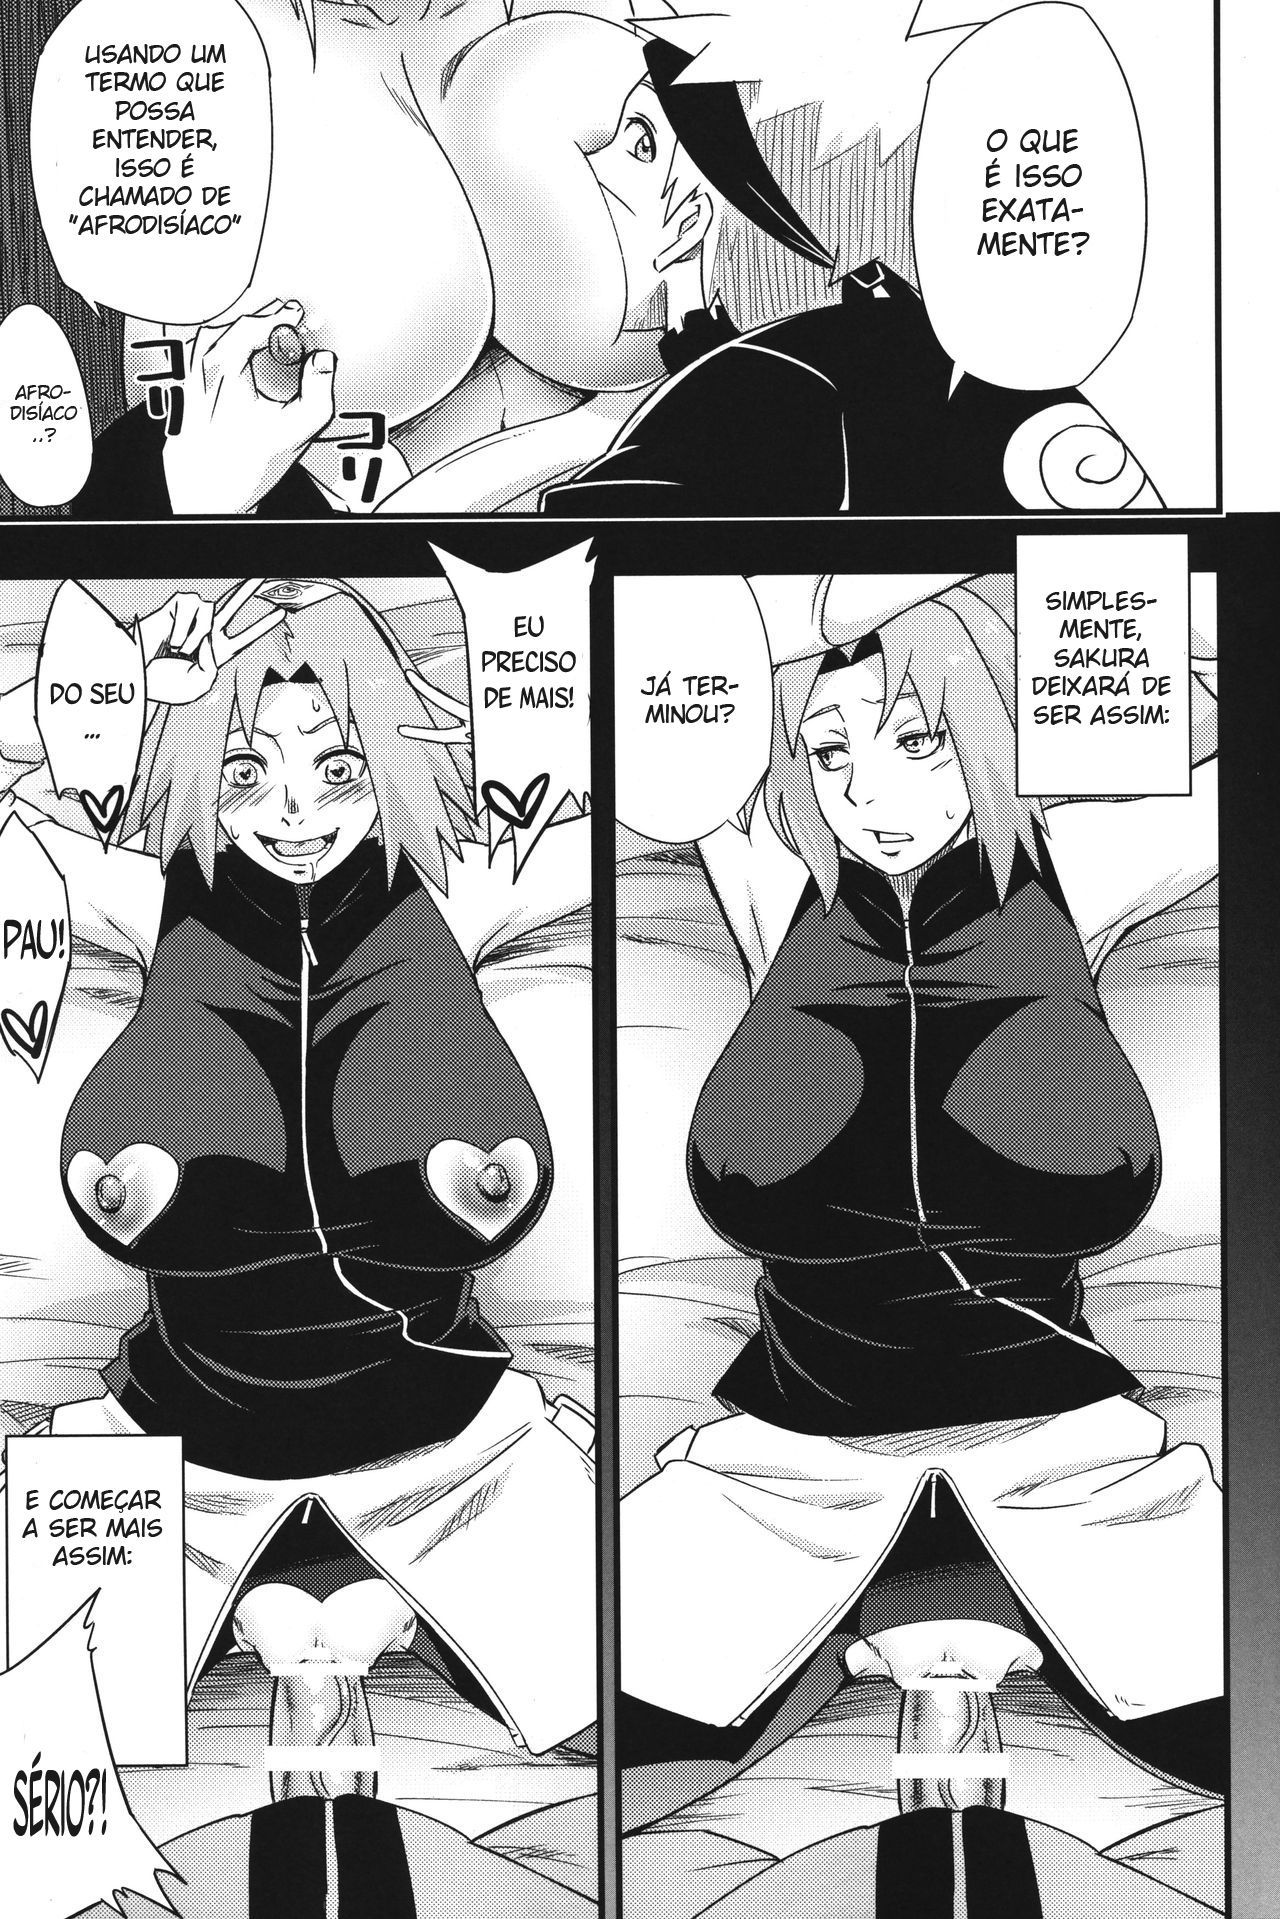 Naruto dando orgasmo as ninjas de Konaha - Foto 9